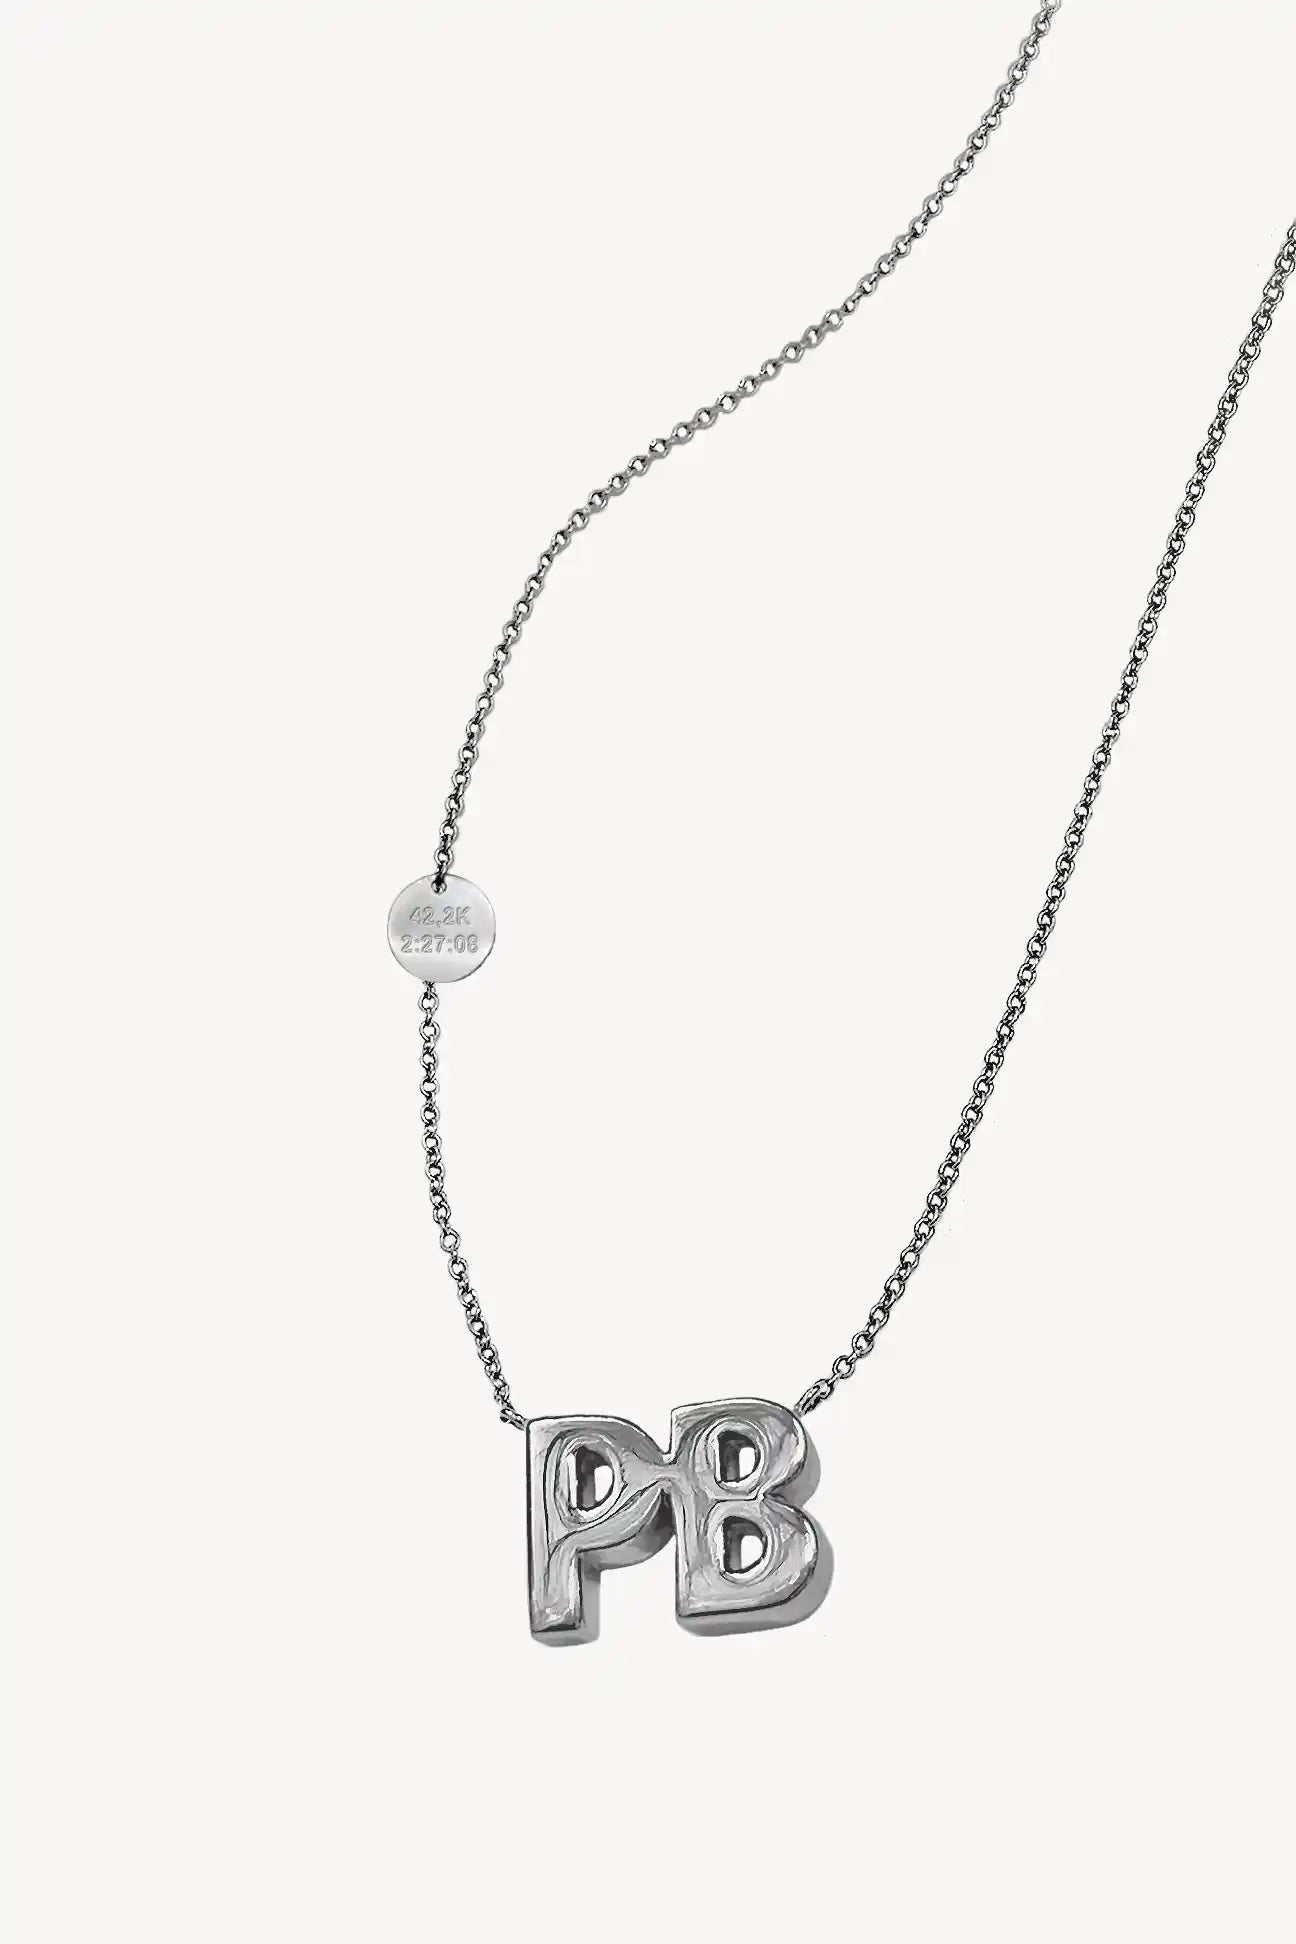 PB Silver Chain